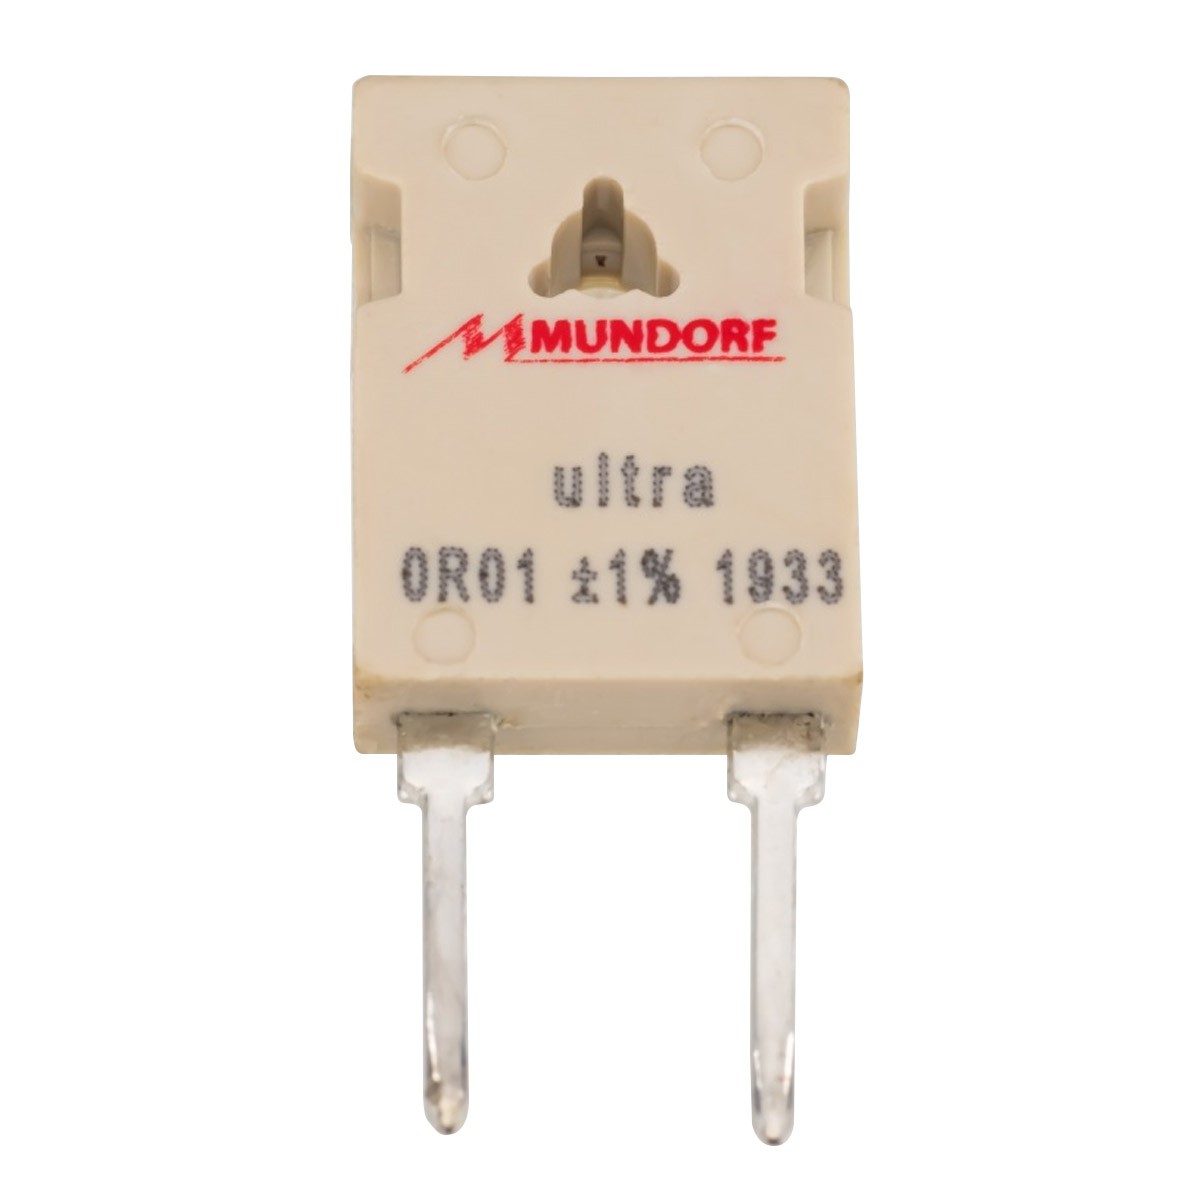 MUNDORF MRESIST ULTRA Resistor 30W 47 Ohm